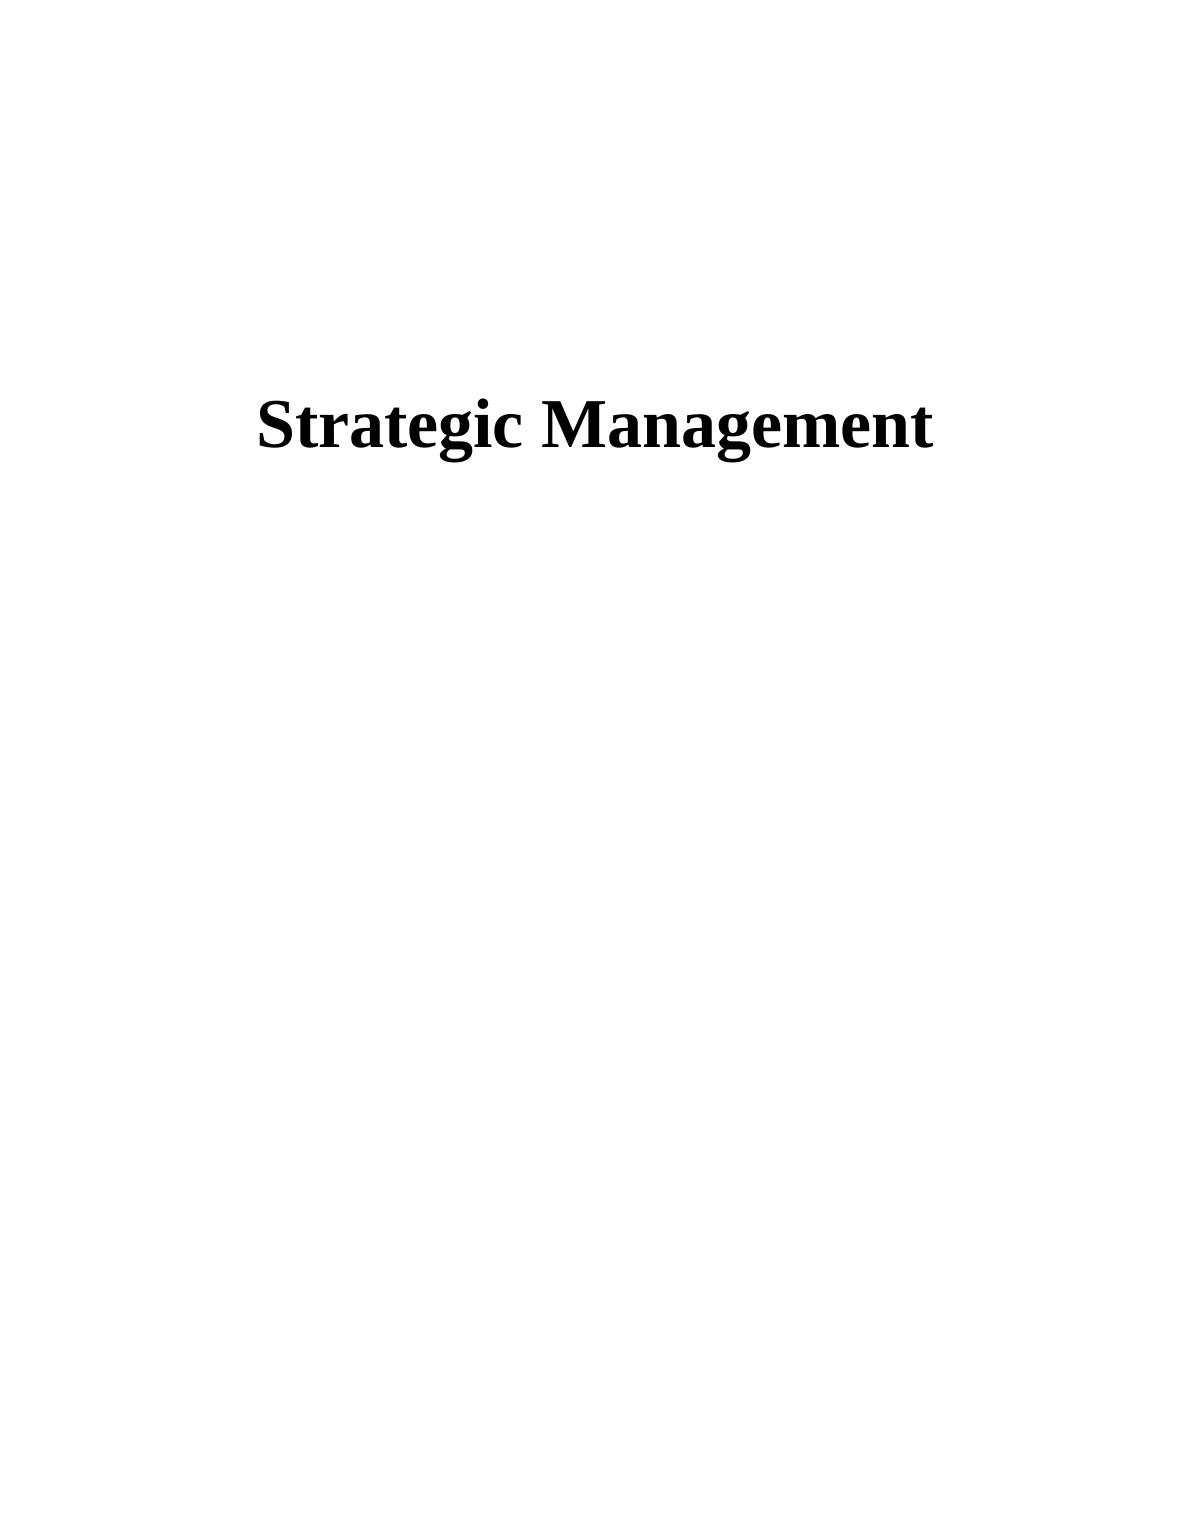 Strategic Management Assignment - Easyjet_1